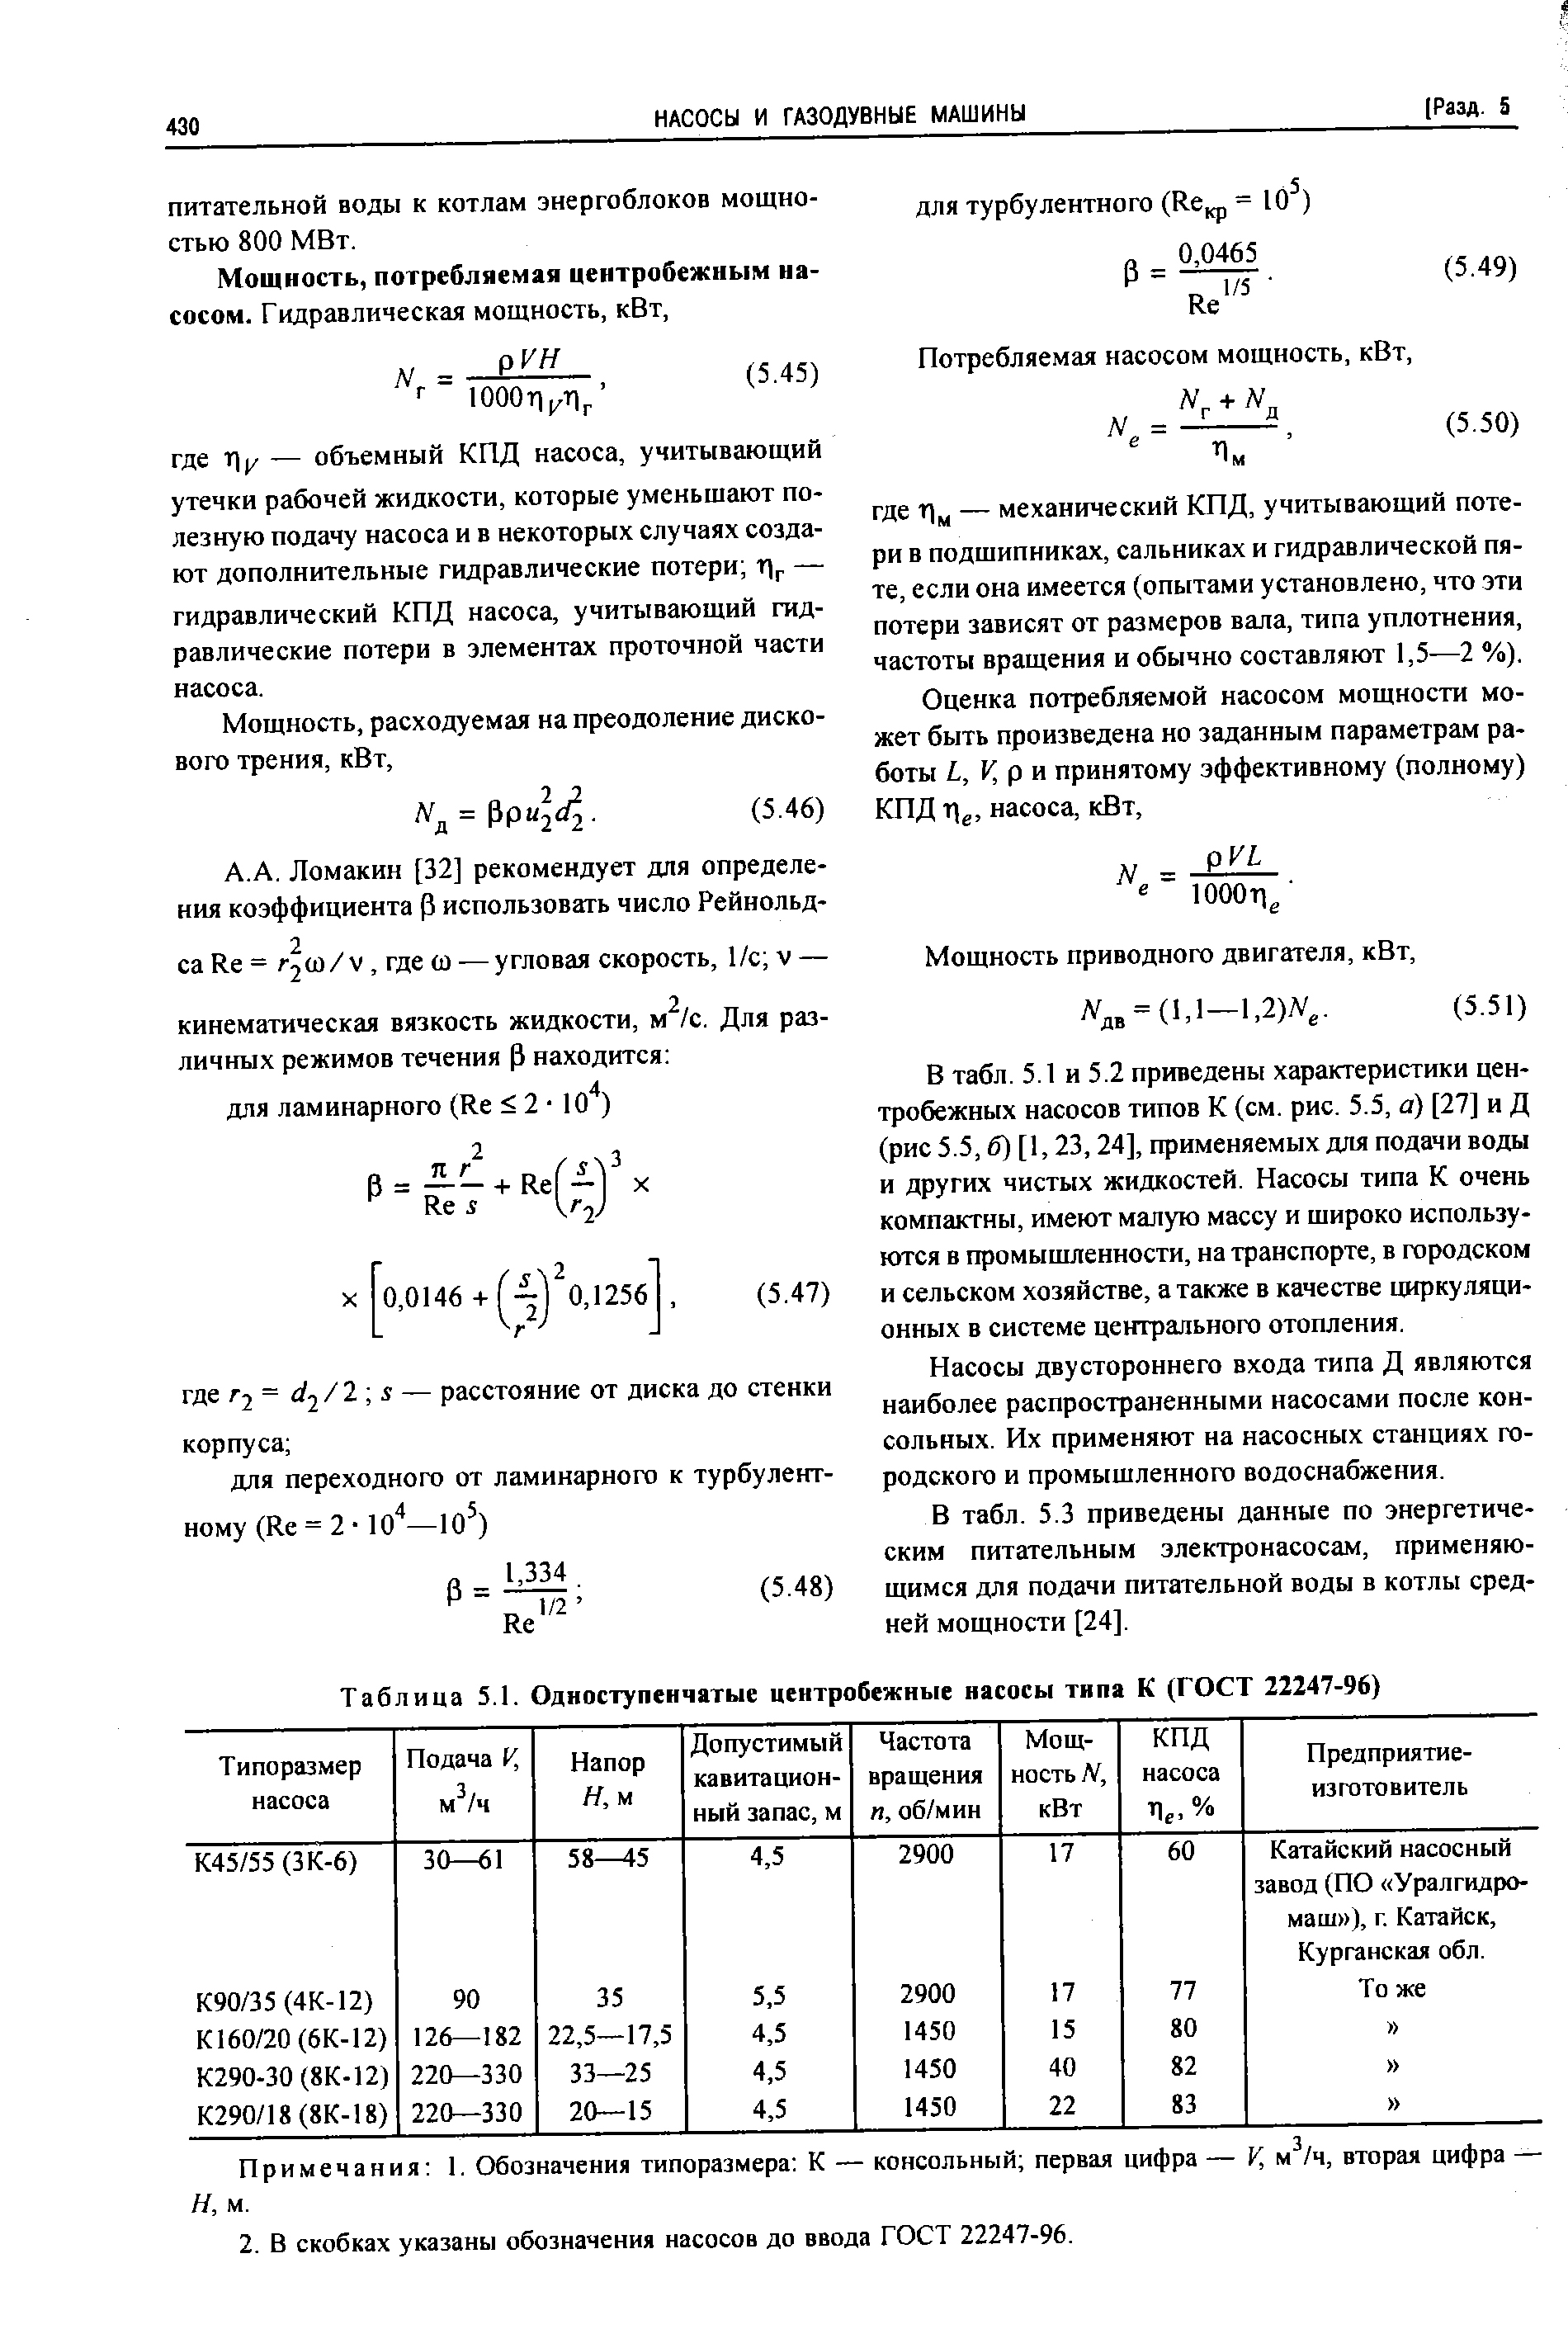 Таблица 5.1. Одноступенчатые центробежные насосы типа К (ГОСТ 22247-96)
